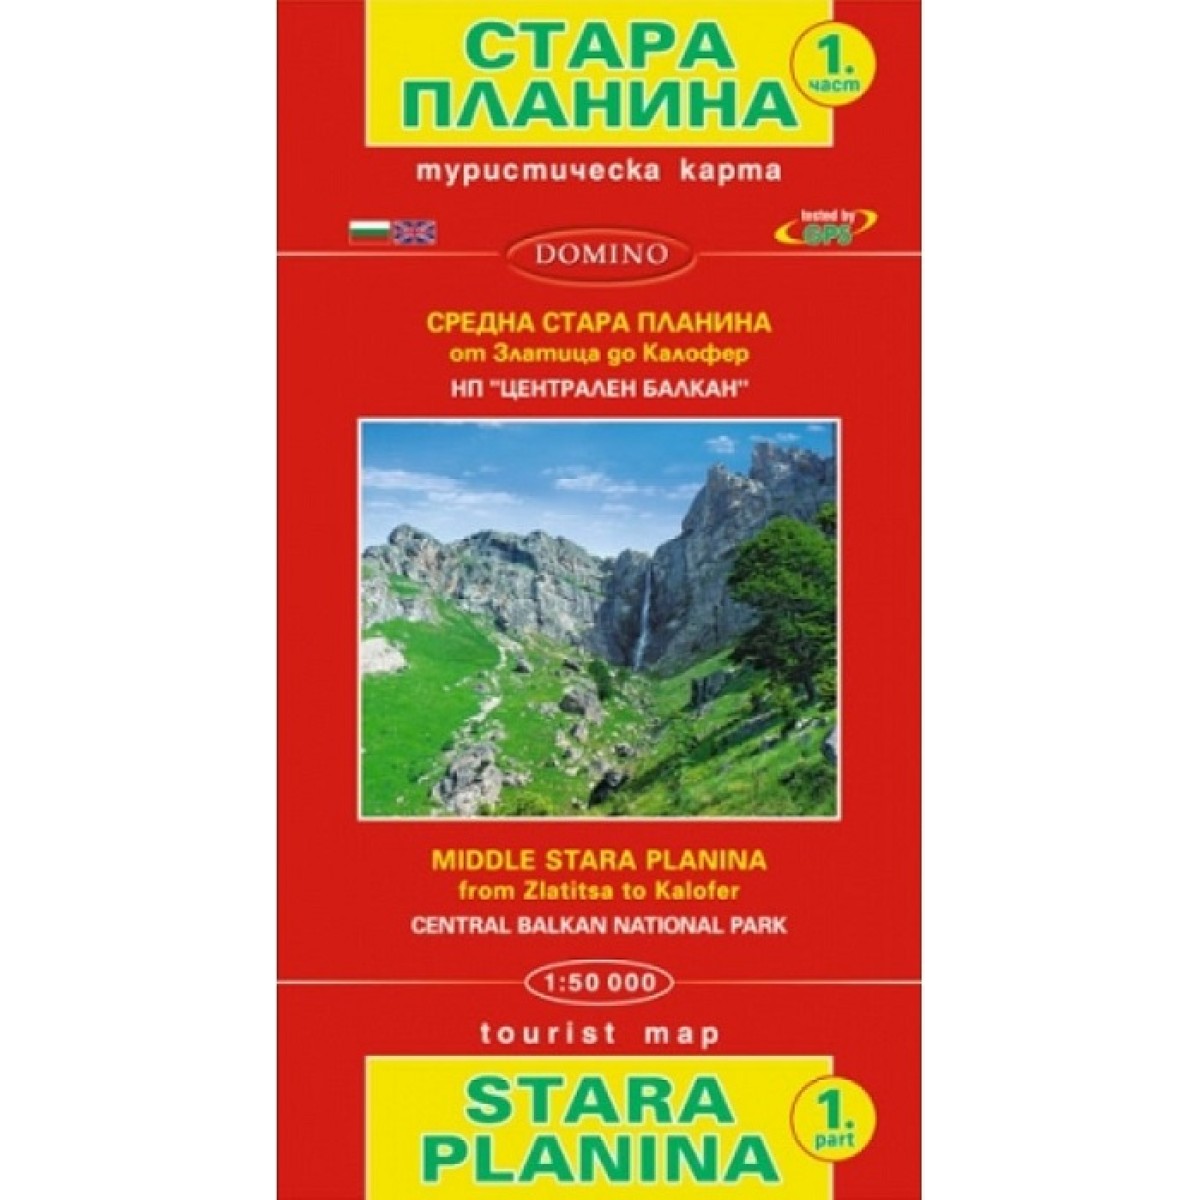 Tourist maps -  Middle Stara planina - part 1 DOMINO - view 1